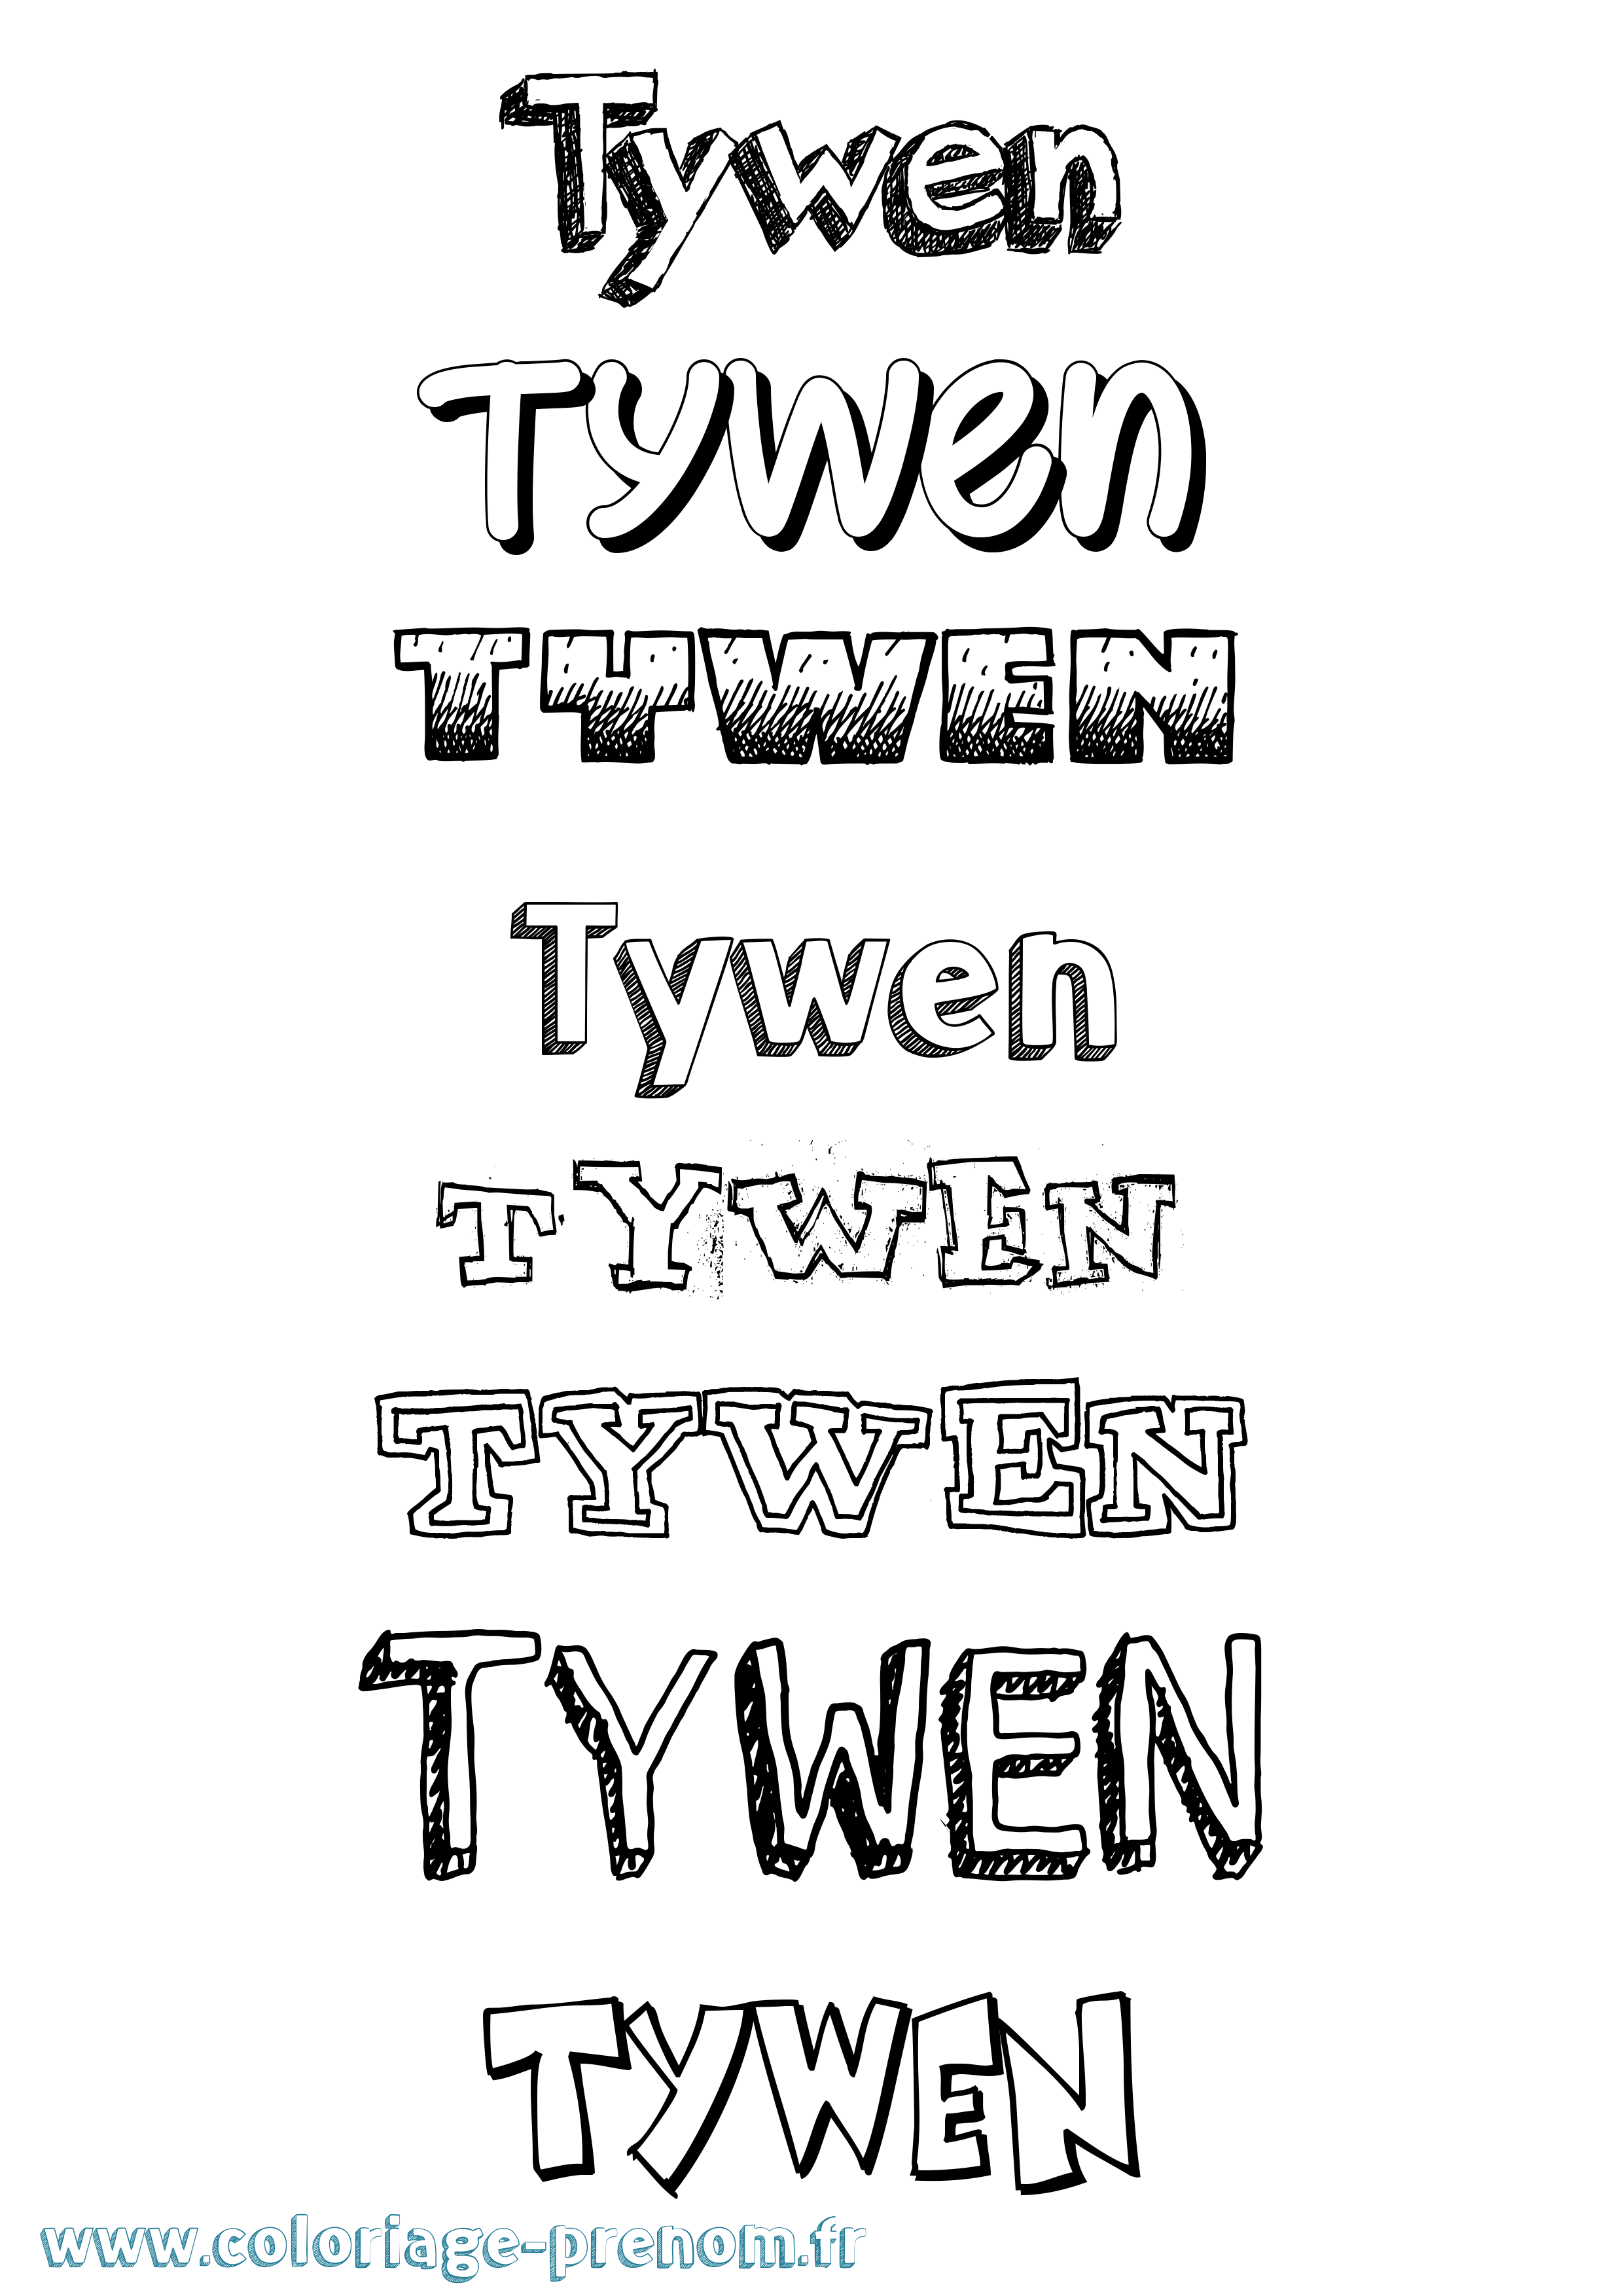 Coloriage prénom Tywen Dessiné